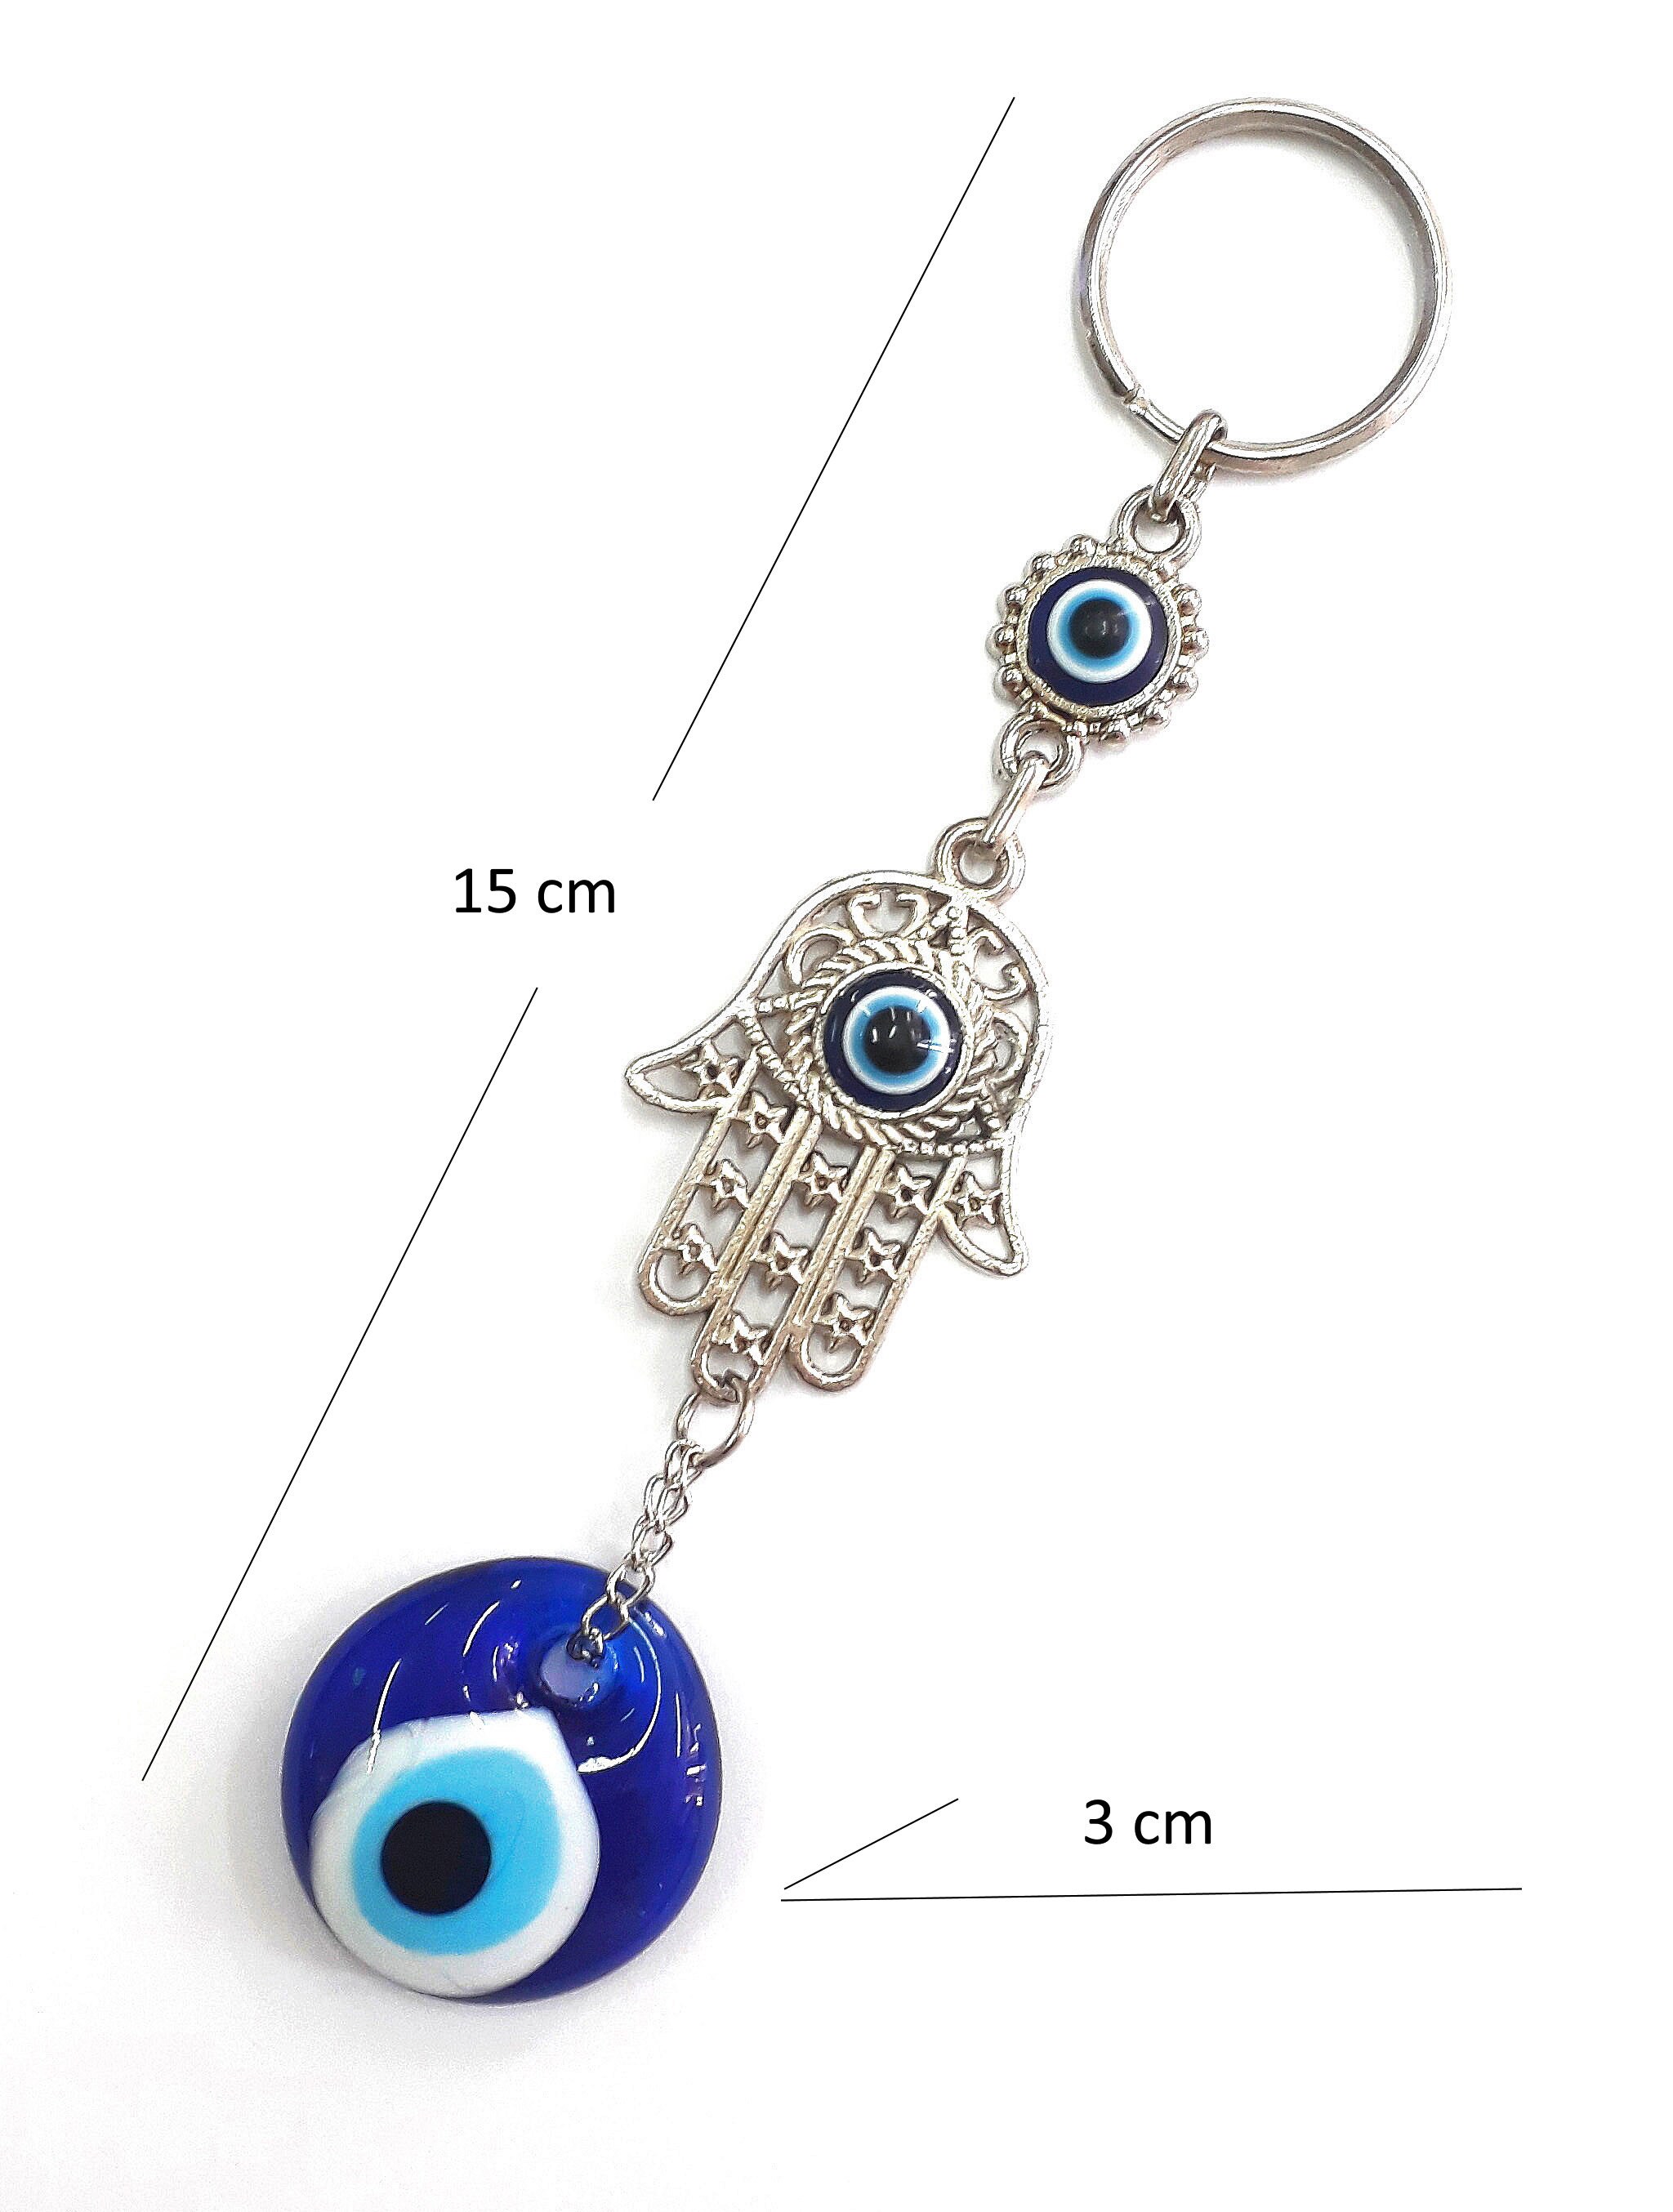 Türkei Nazar Boncuk Wandbehänge perlen Deko Glas Blau Auge